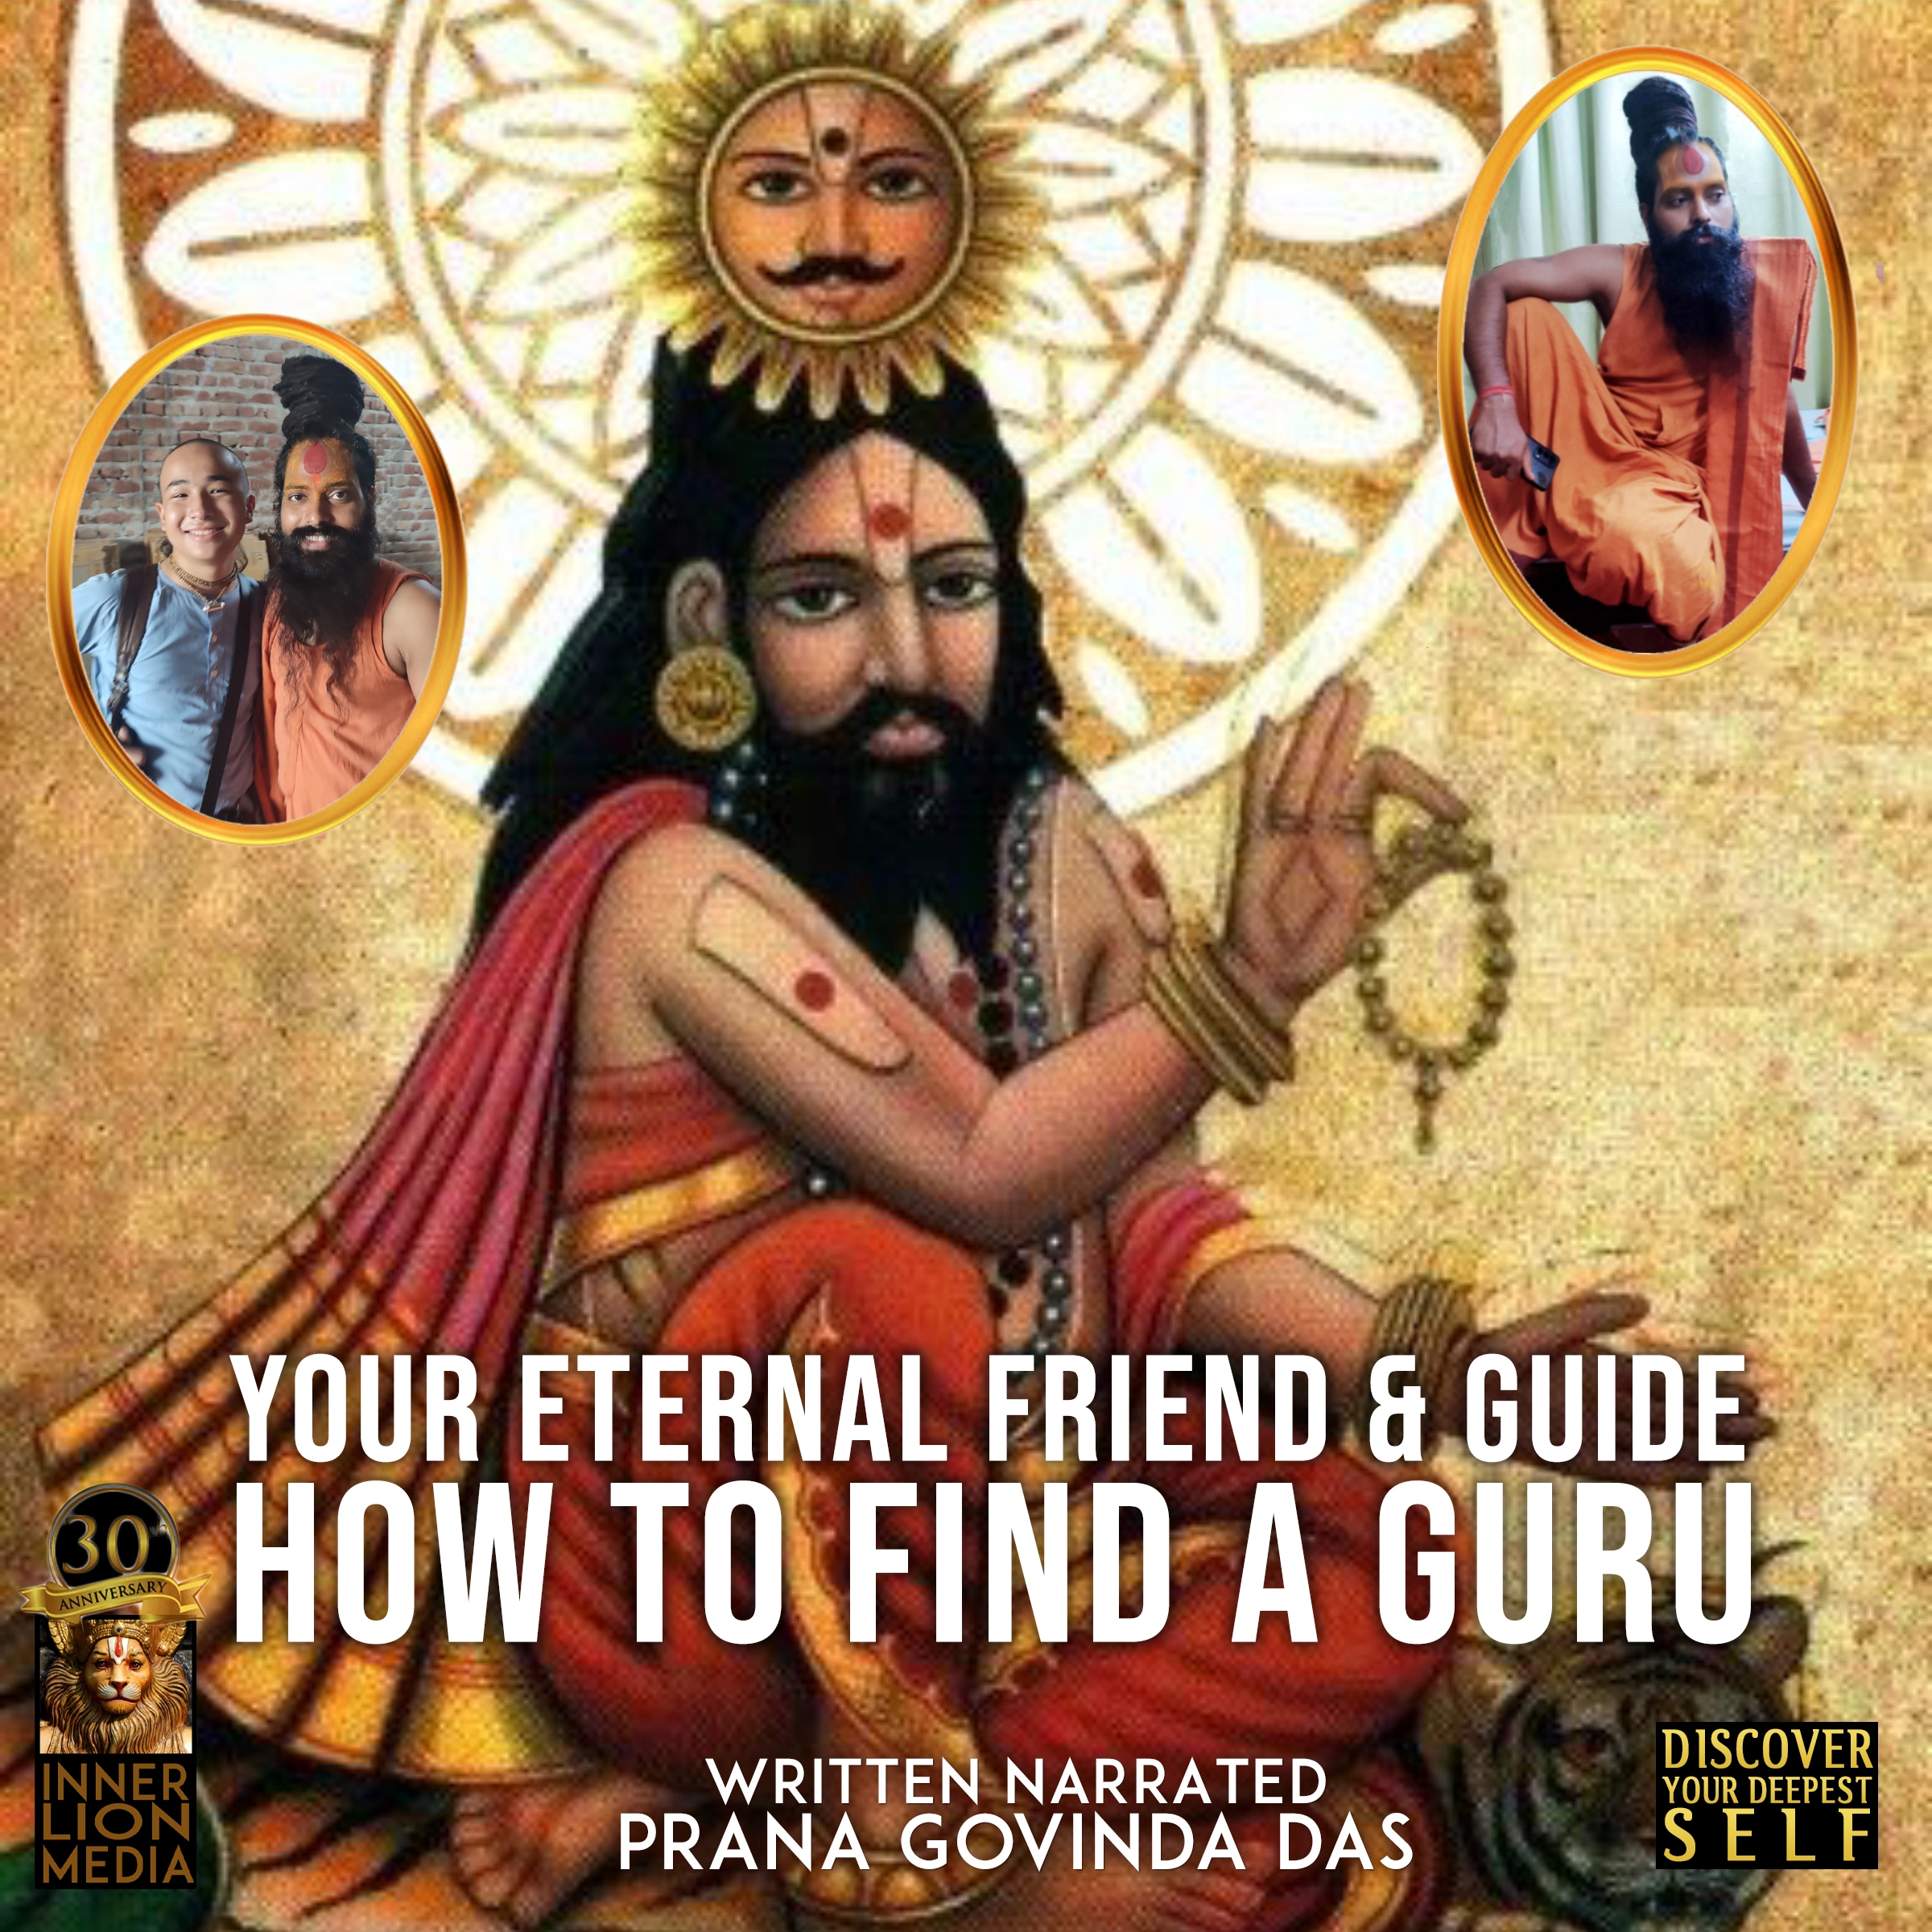 How To Find A Guru by Prana Govinda Das Audiobook